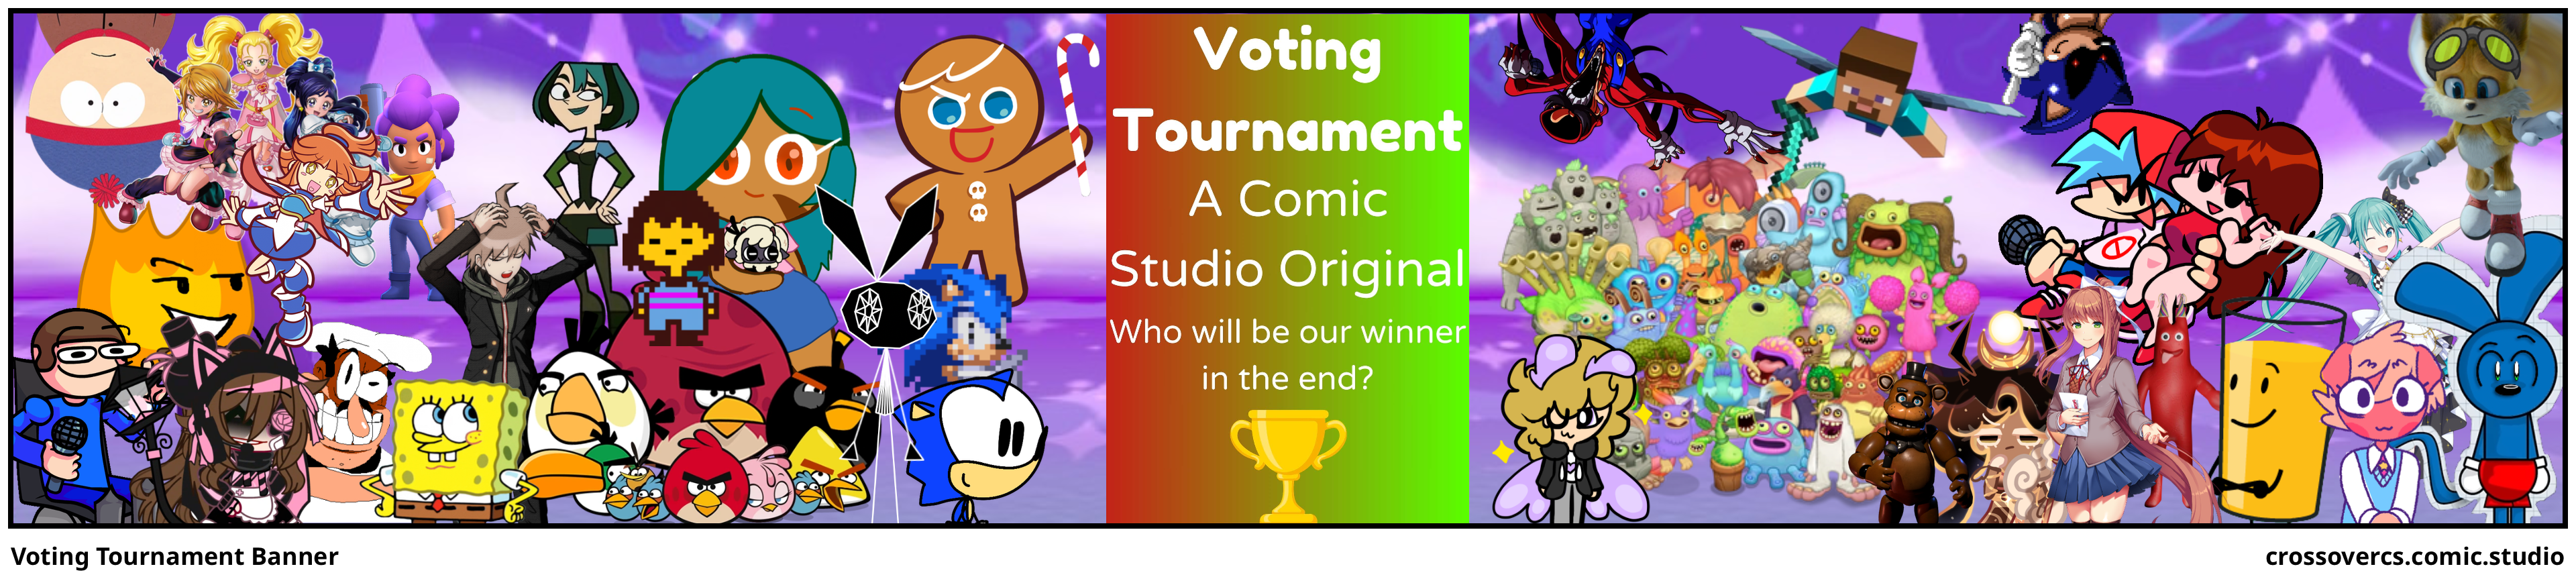 Voting Tournament Banner